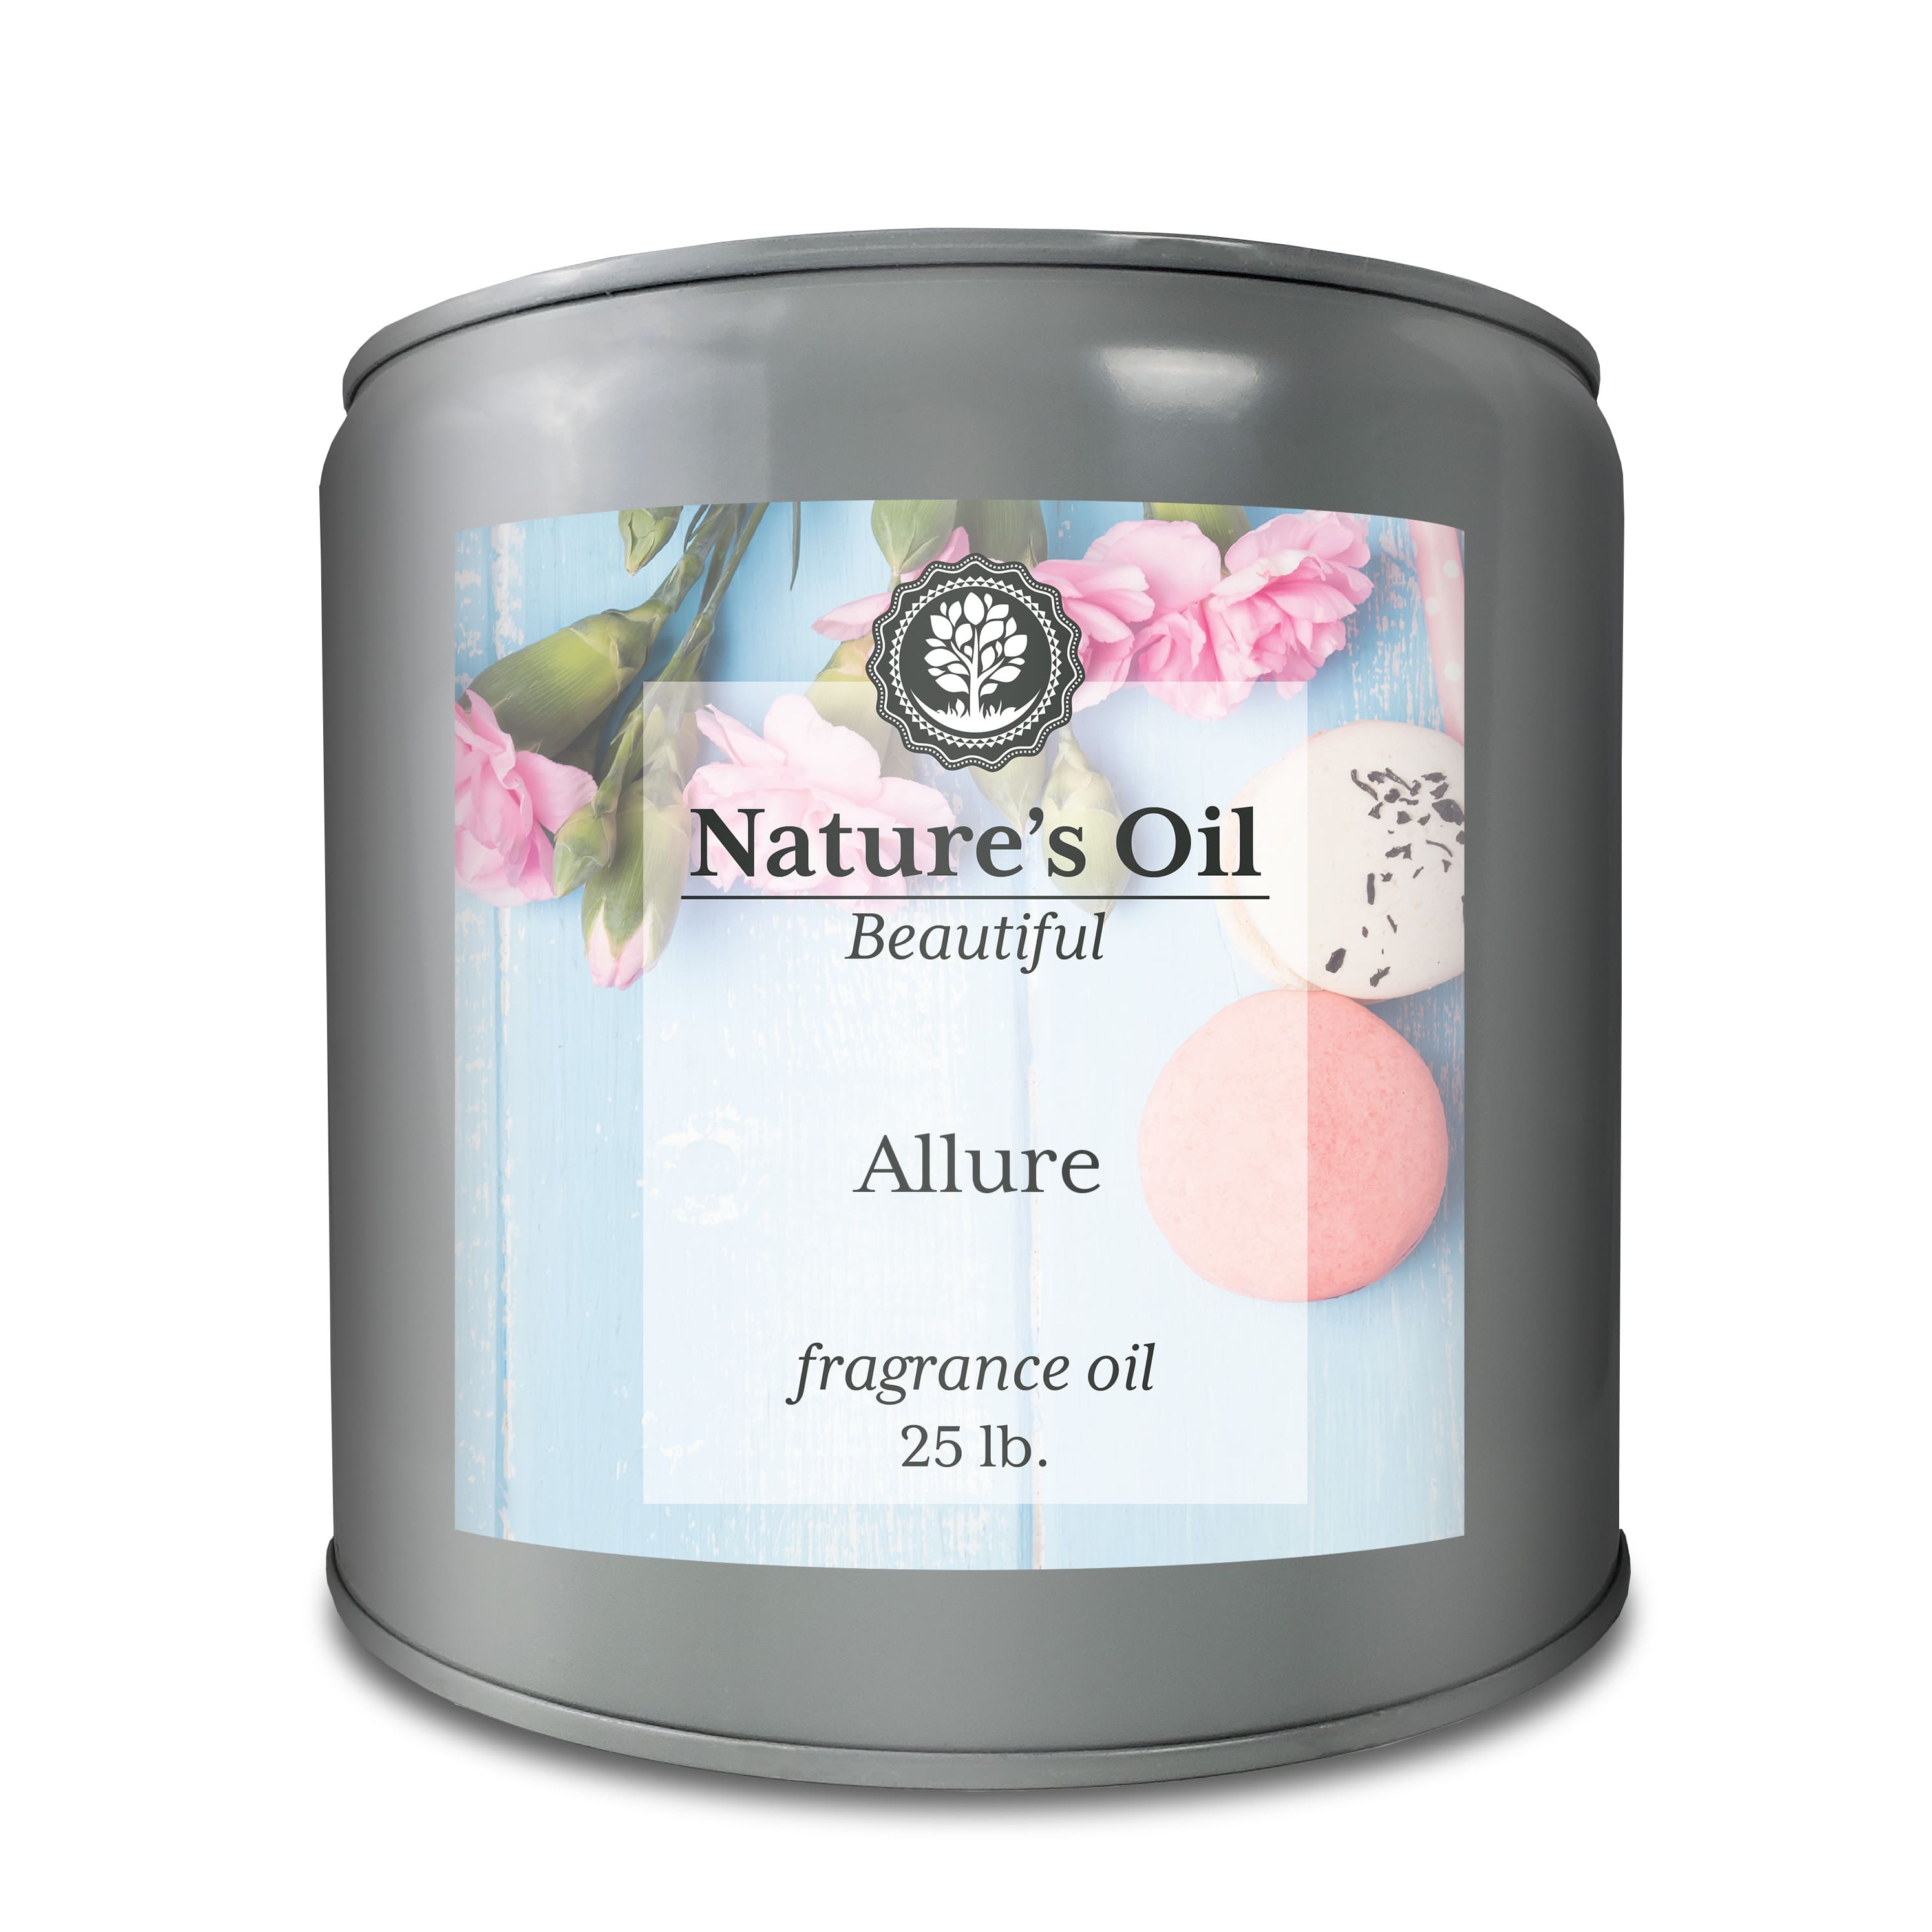 Nature's Oil Allure Fragrance Oil